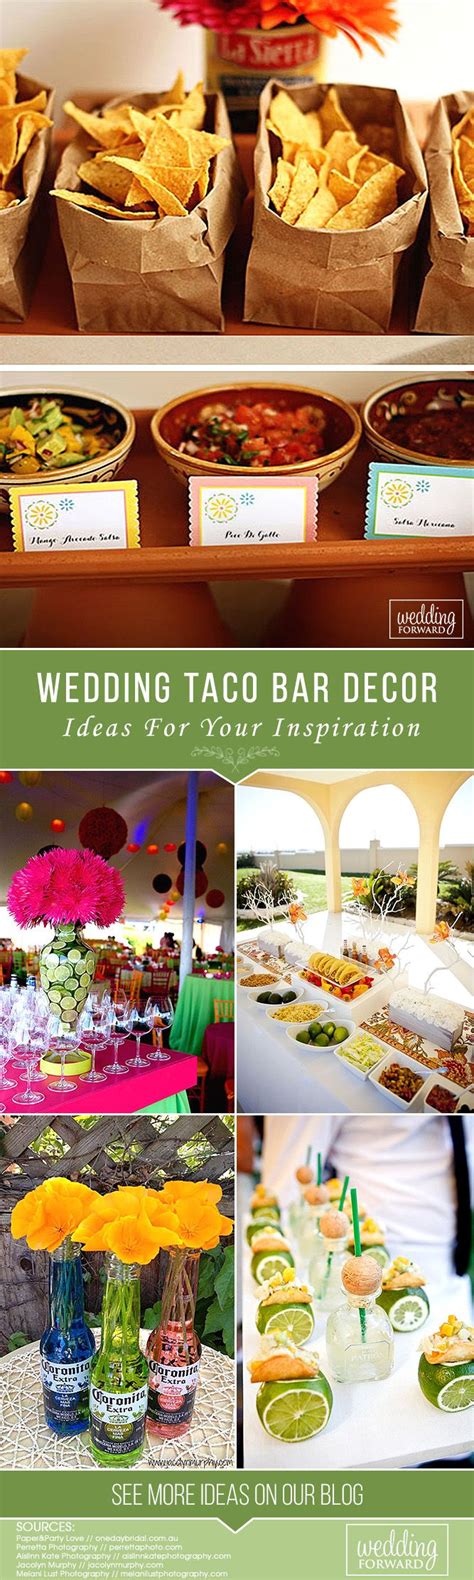 How To Decorate Wedding Taco Bar Wedding Forward Taco Bar Wedding Taco Bar Taco Party